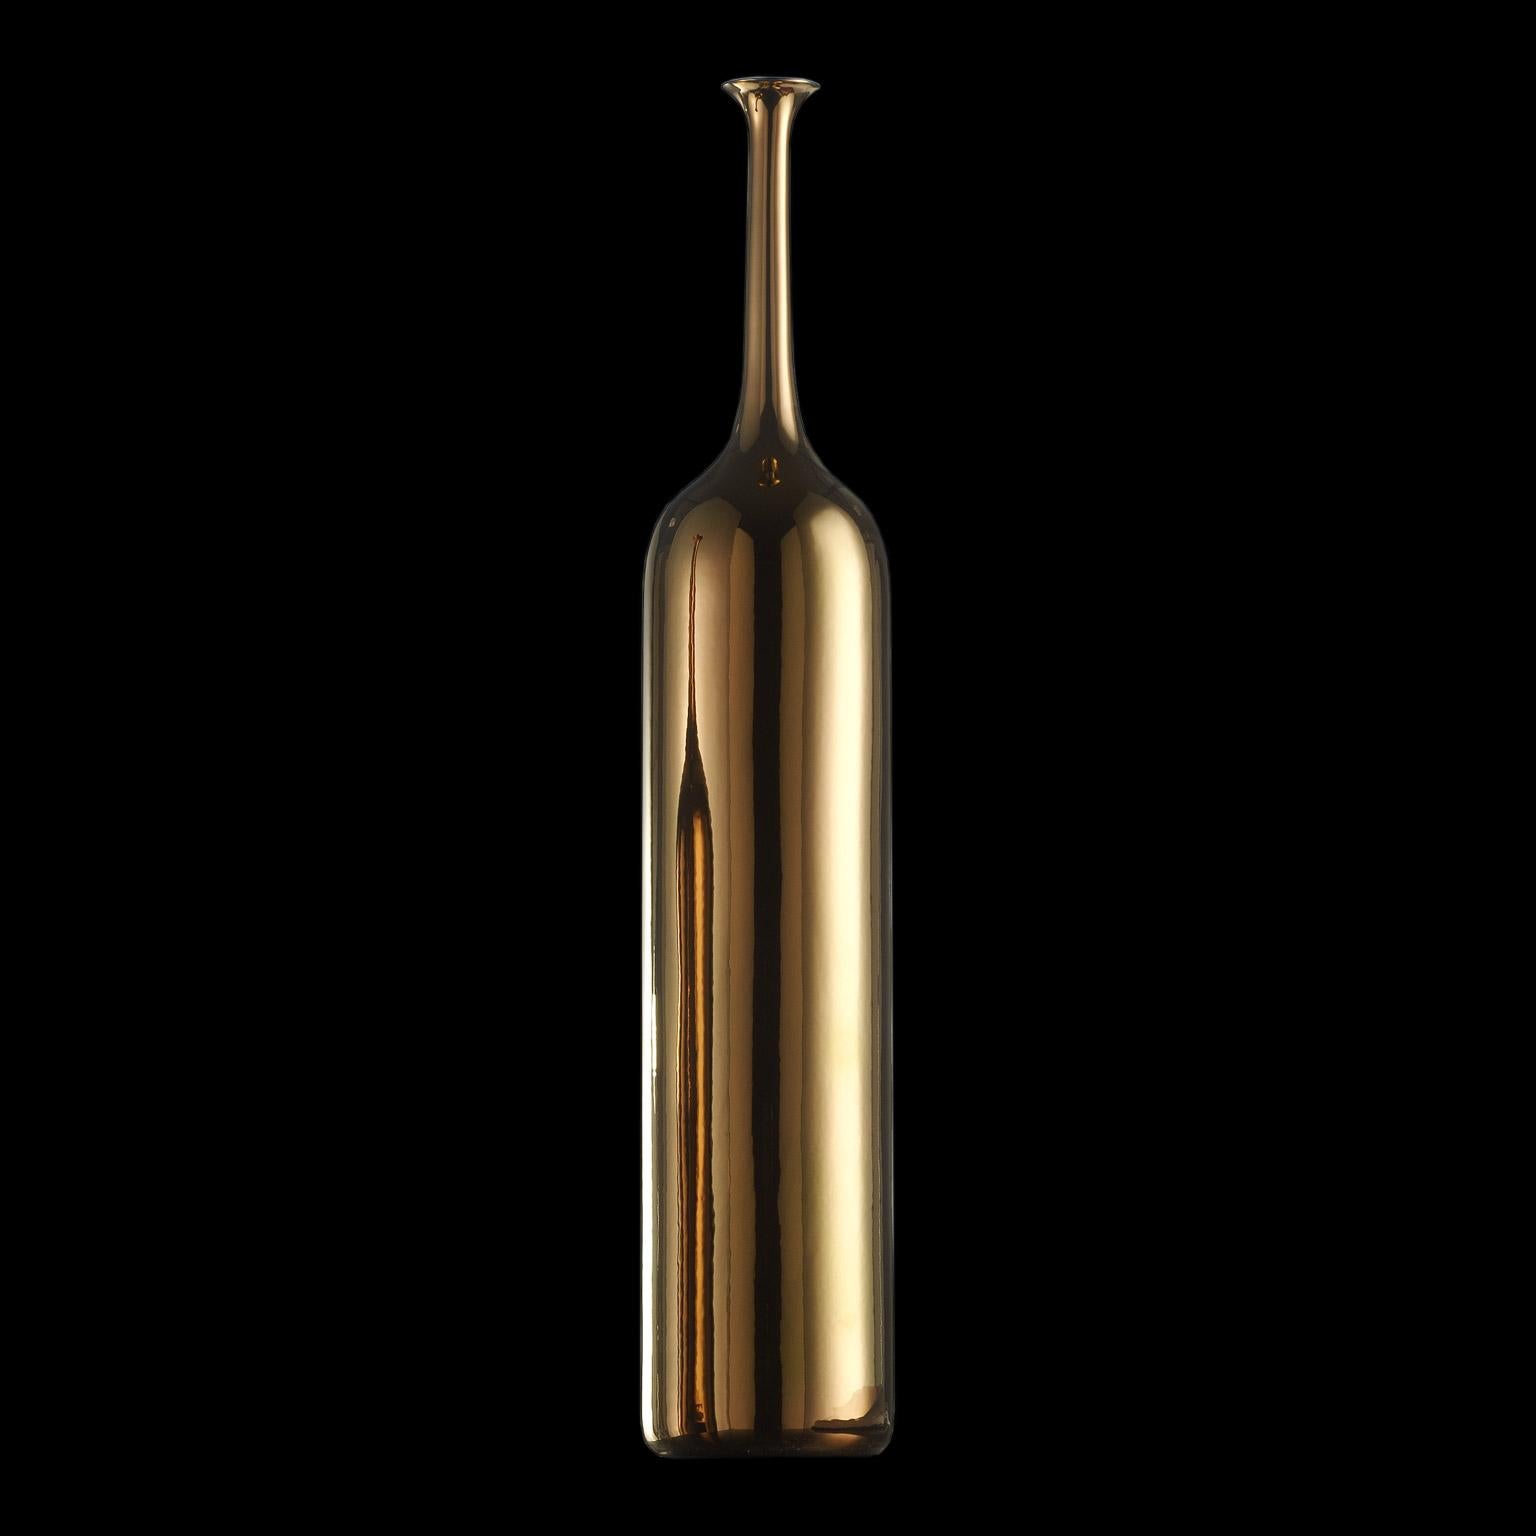 Ceramic vase SWAN
Cod. B003 LN
Handcrafted in 24kt gold

Measures:
Height 110.0
Diameter 19.0 cm.
  